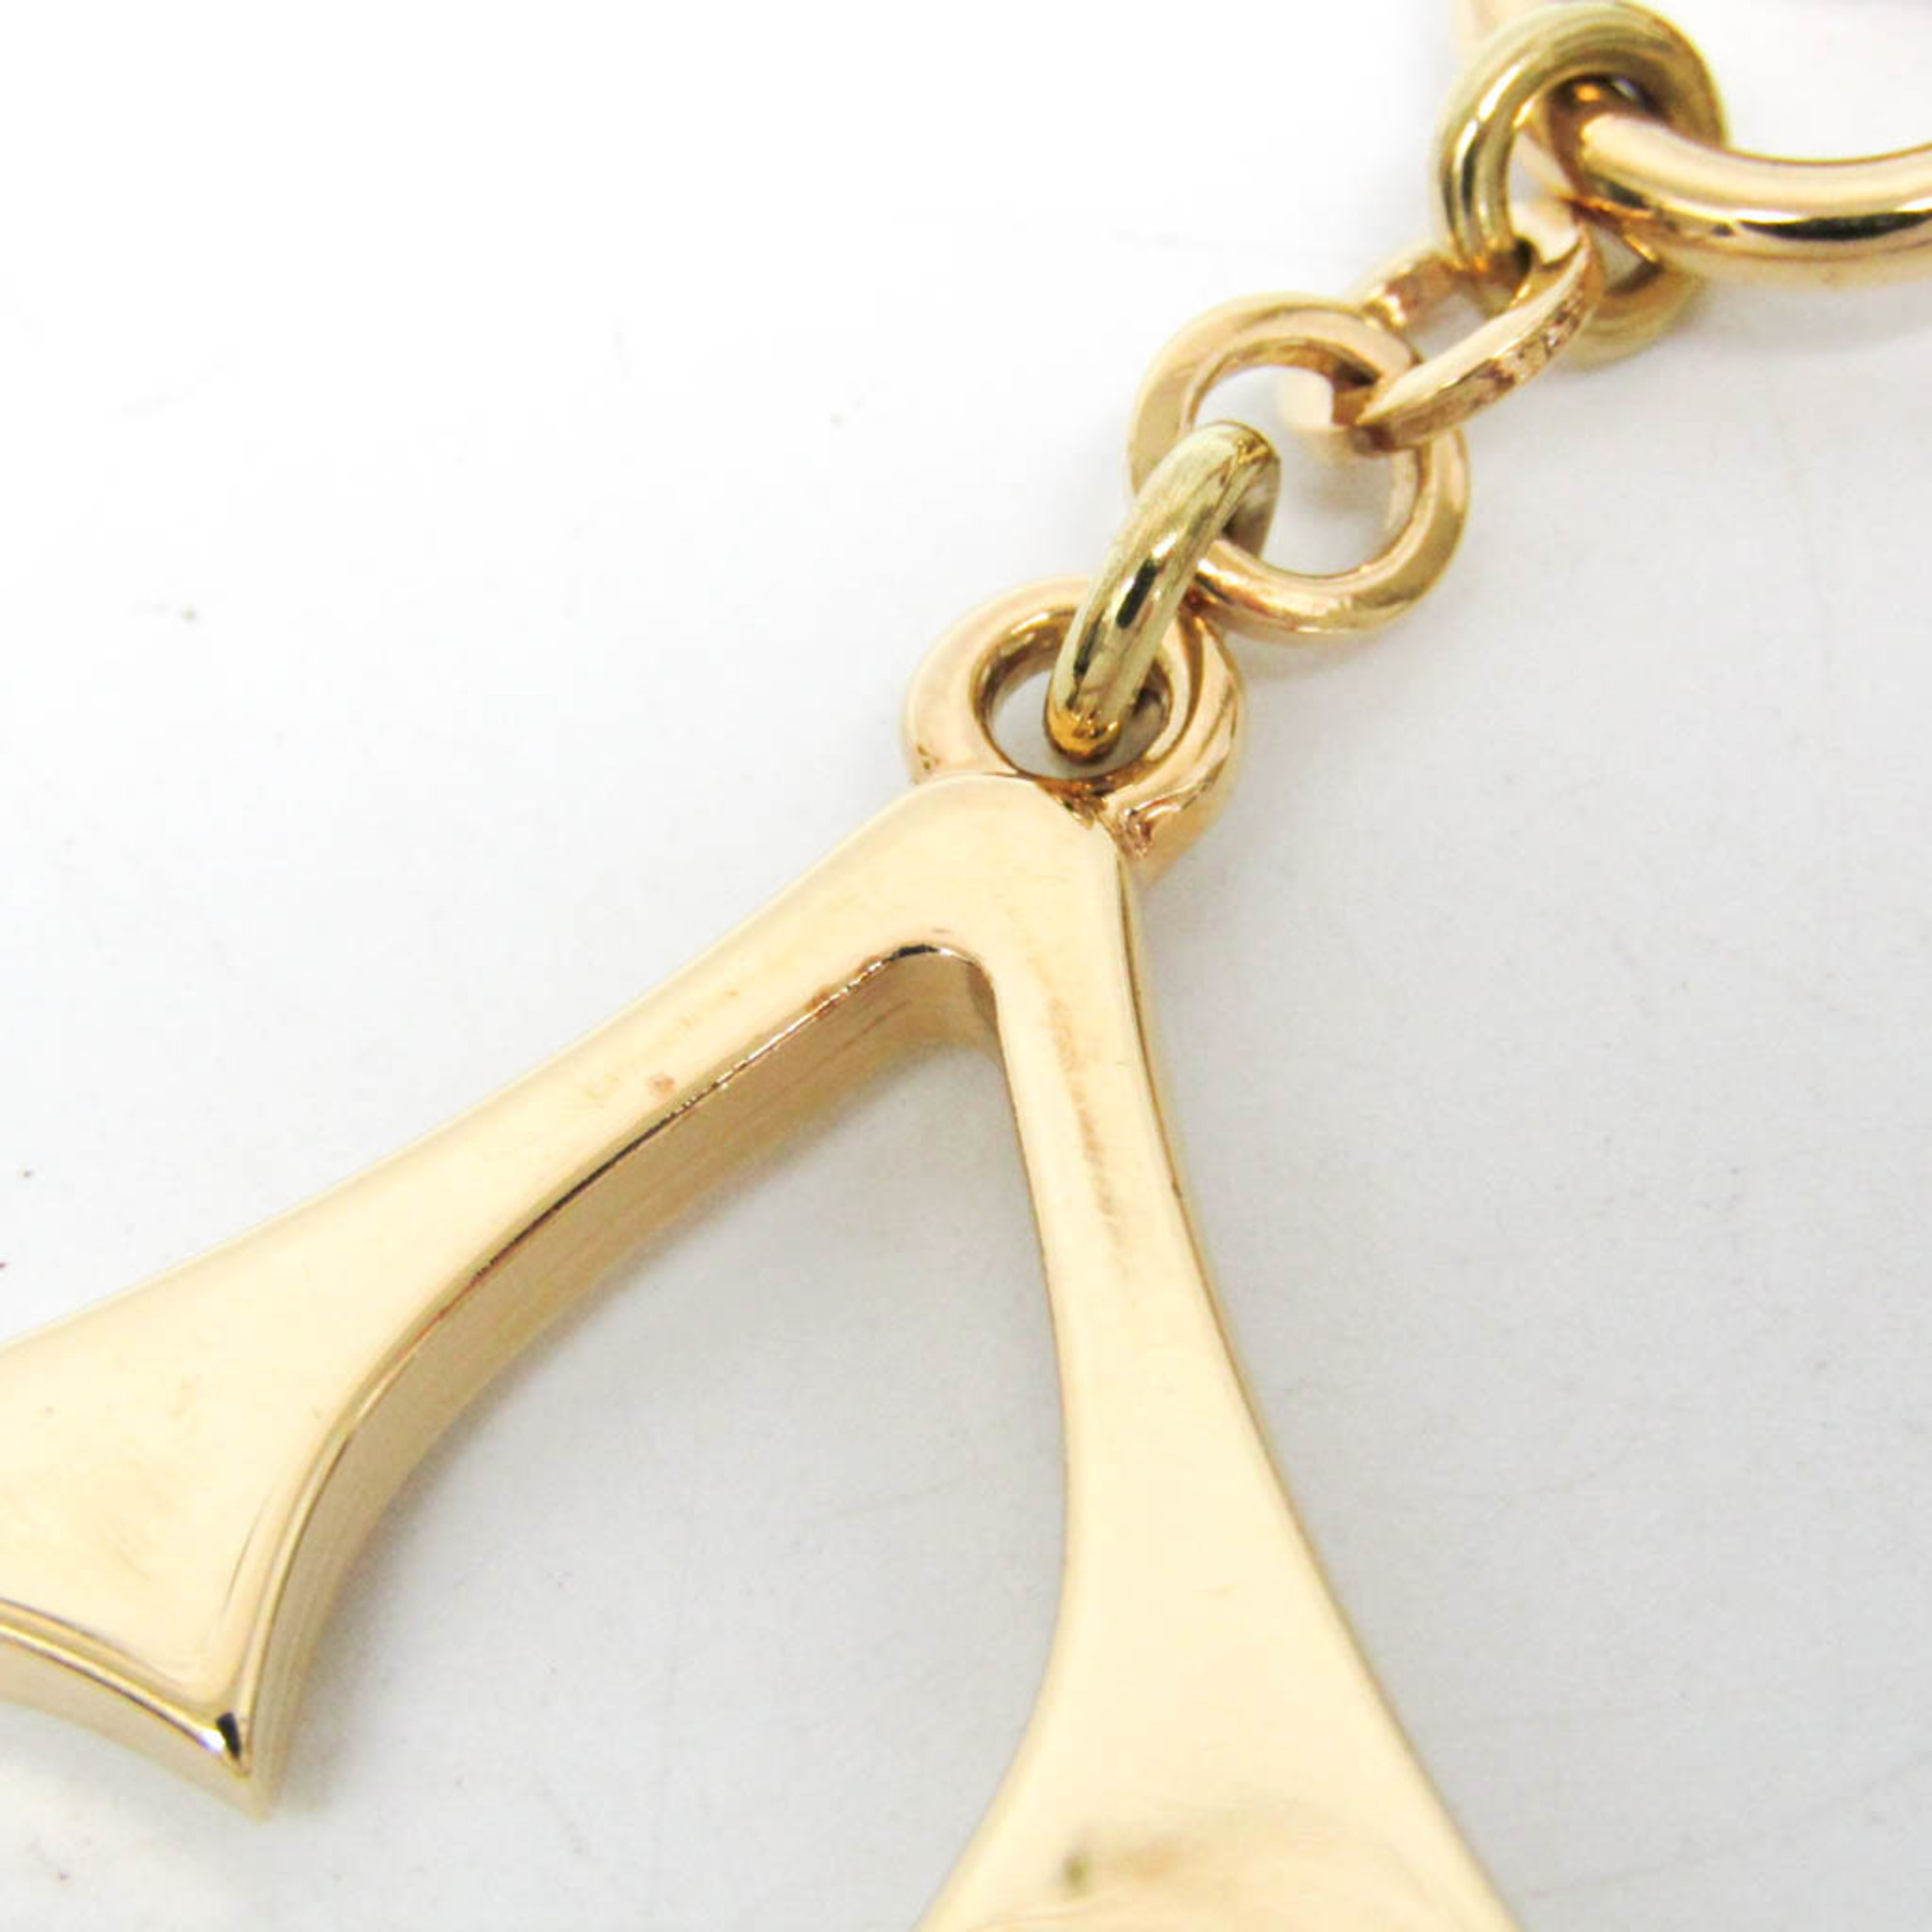 Louis Vuitton Puzzle Key Holder M65218 Keyring (Dark Brown,Gold)